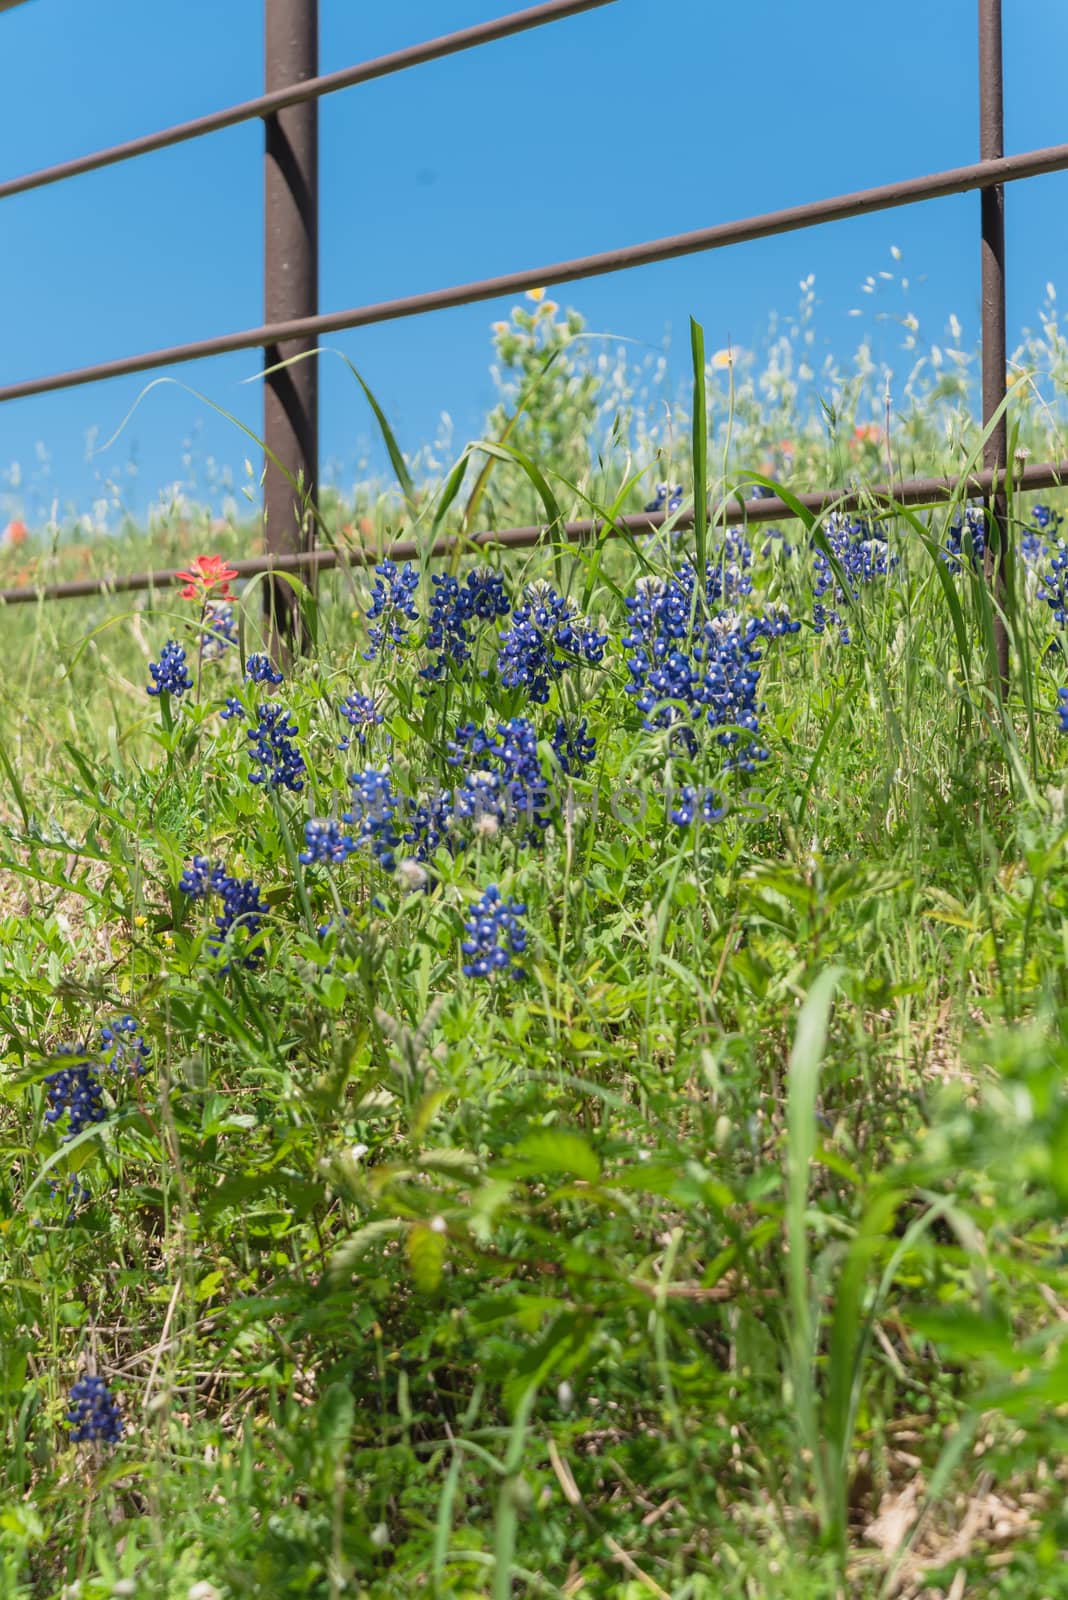 Blossom bluebonnet fields along rustic fence in countryside of Texas, America by trongnguyen